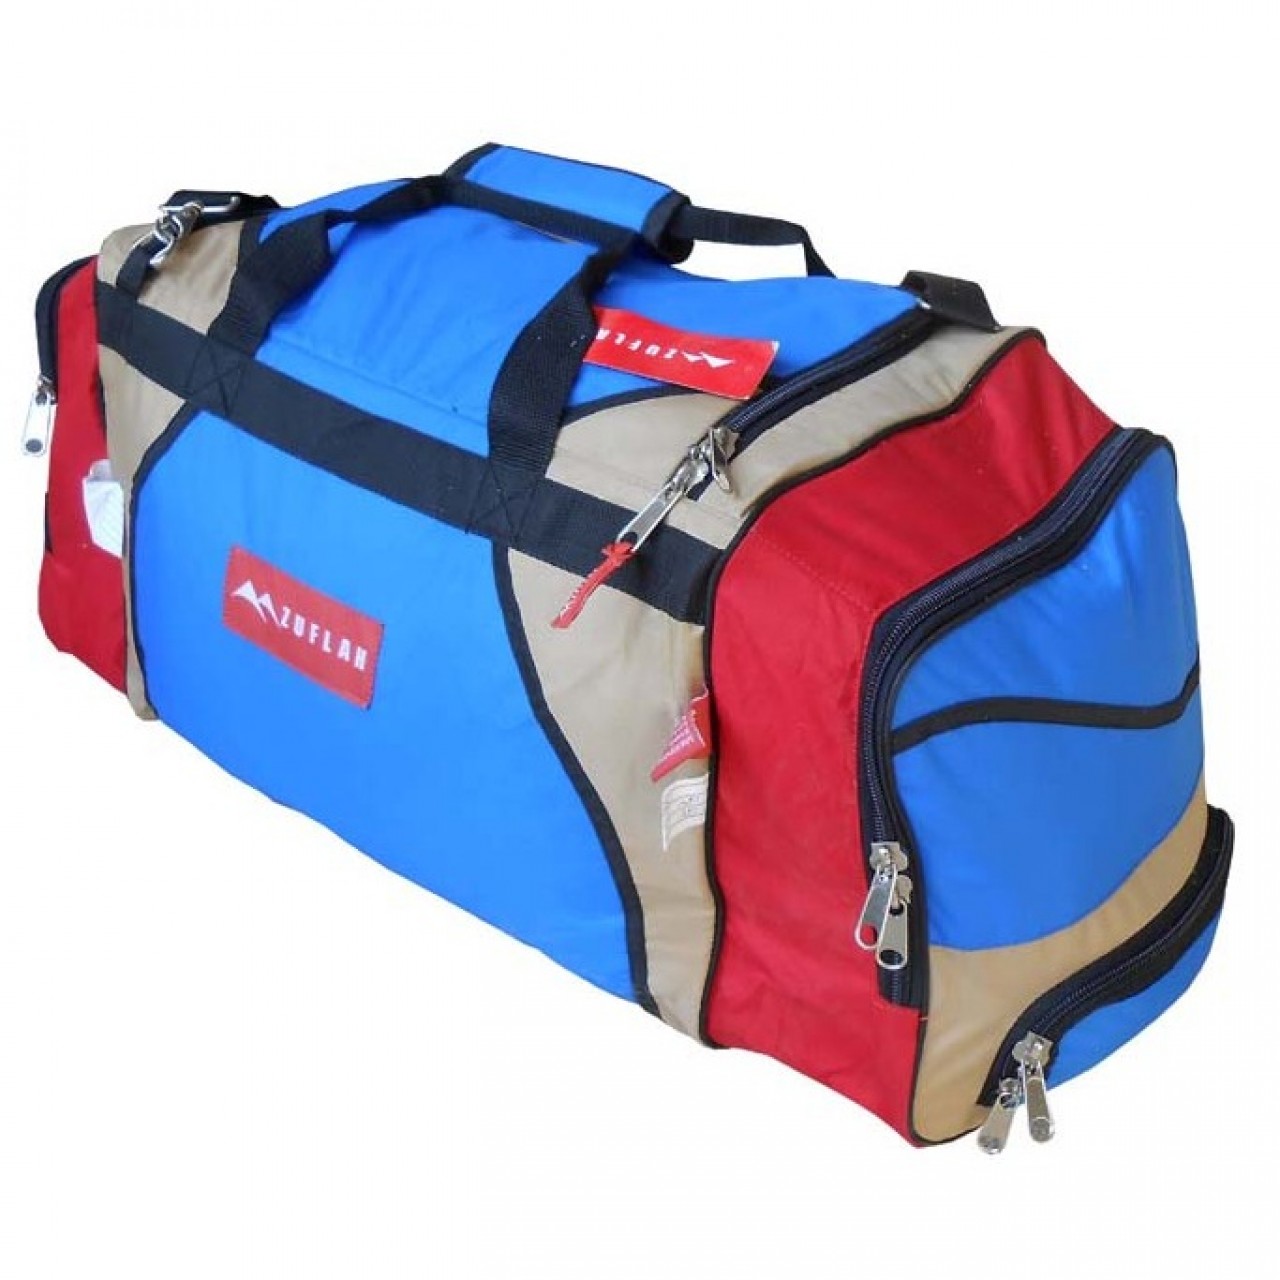 Travel Bag - Large - Red, Khaki & Royal Blue